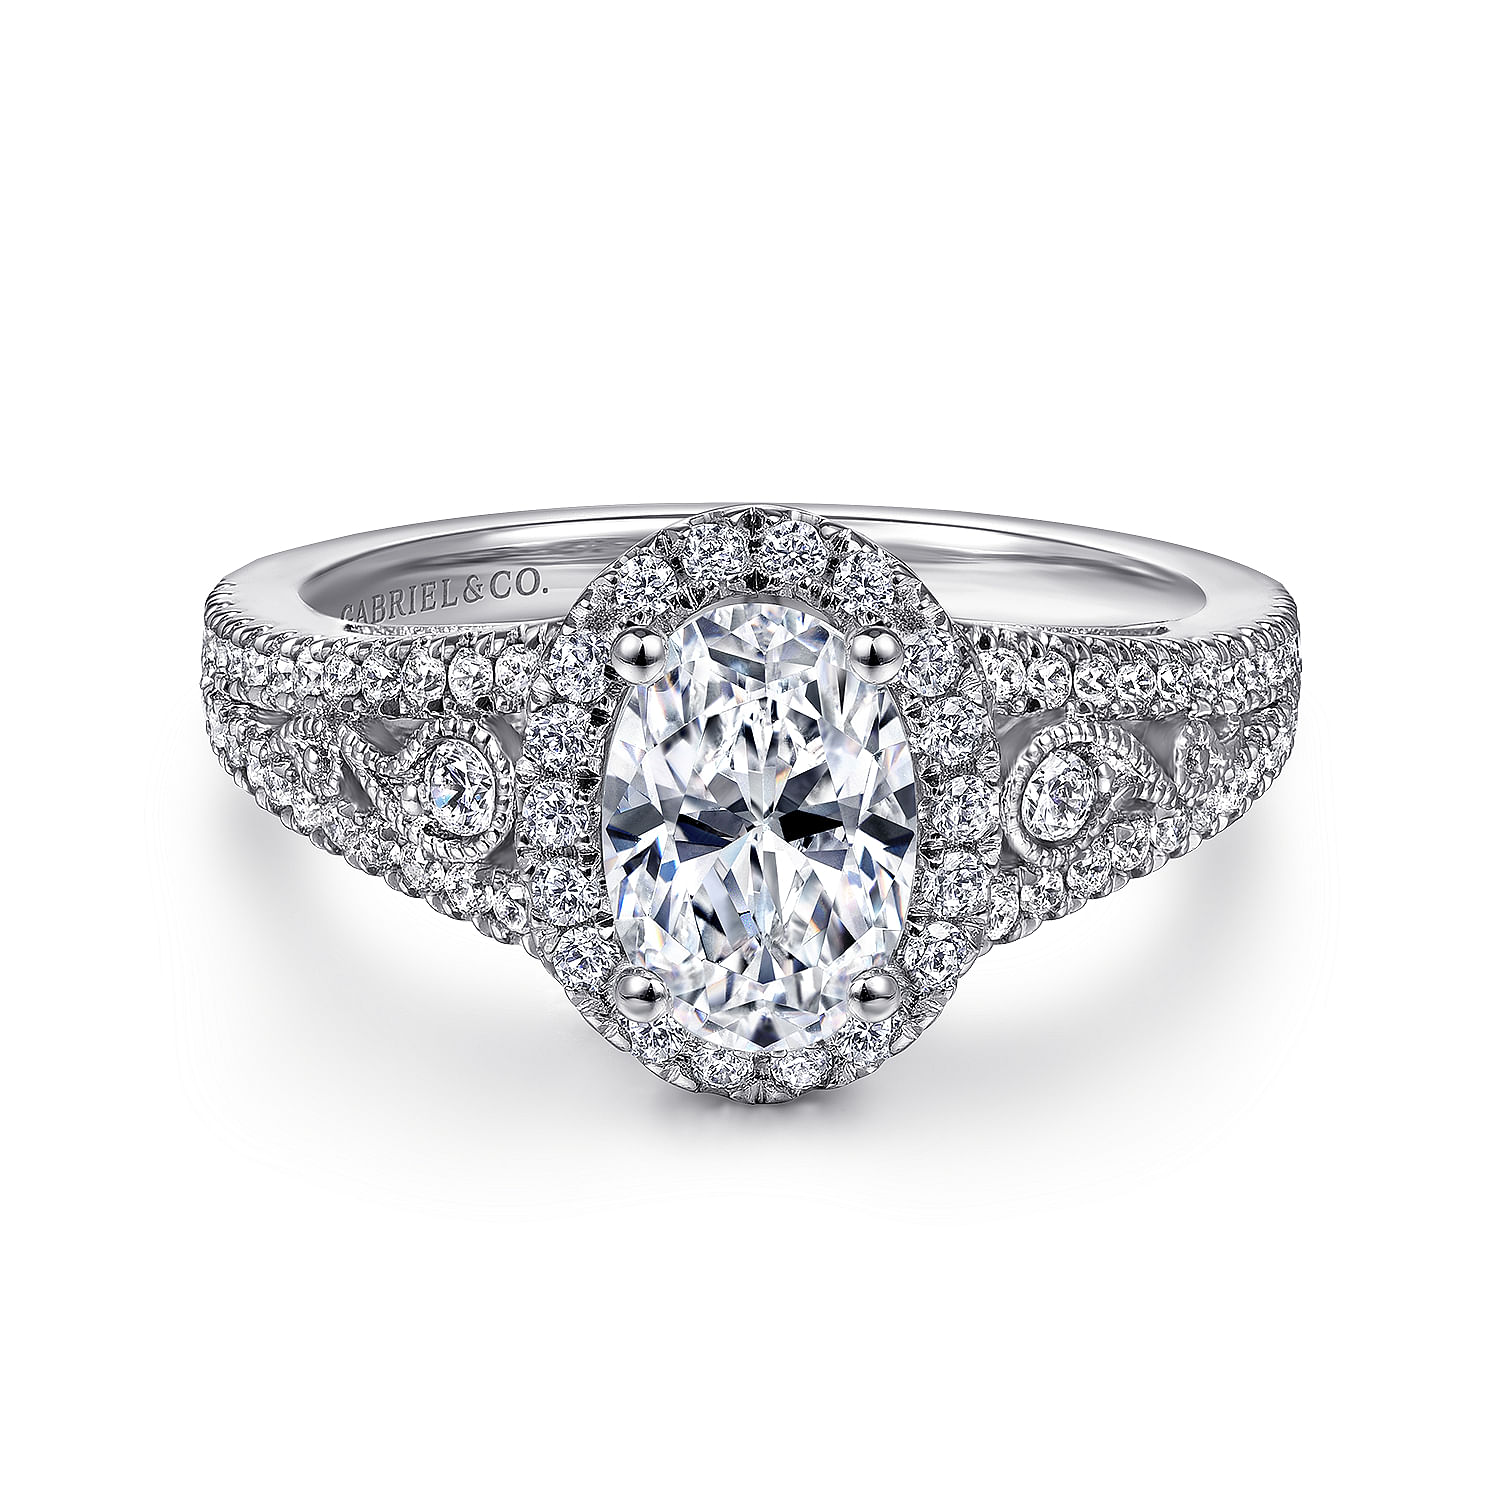 Marlena---Vintage-Inspired-14K-White-Gold-Oval-Halo-Diamond-Engagement-Ring1